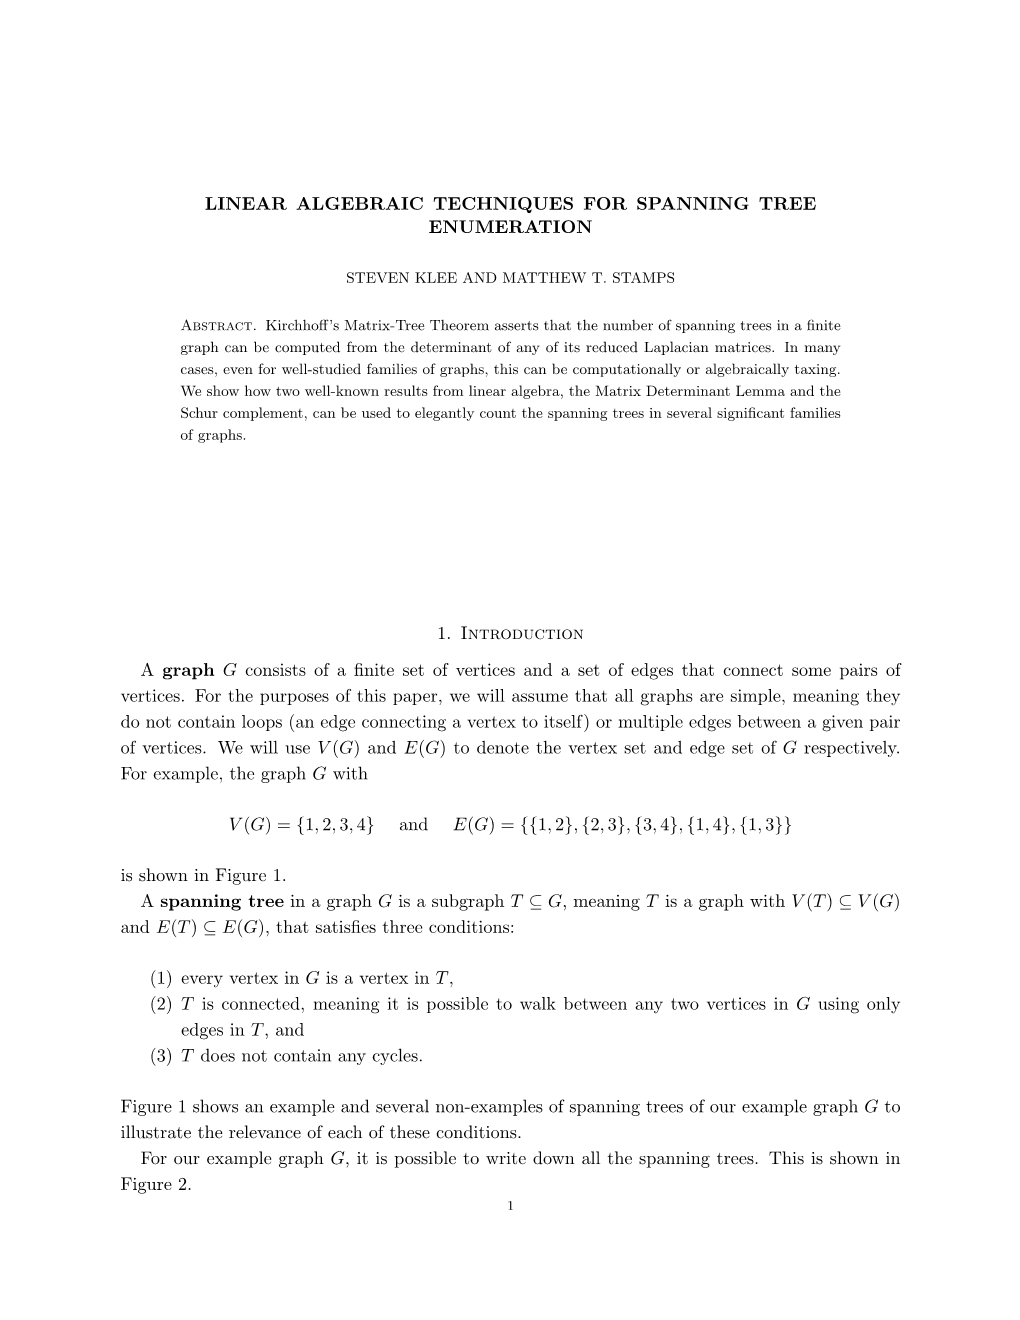 Linear Algebraic Techniques for Spanning Tree Enumeration